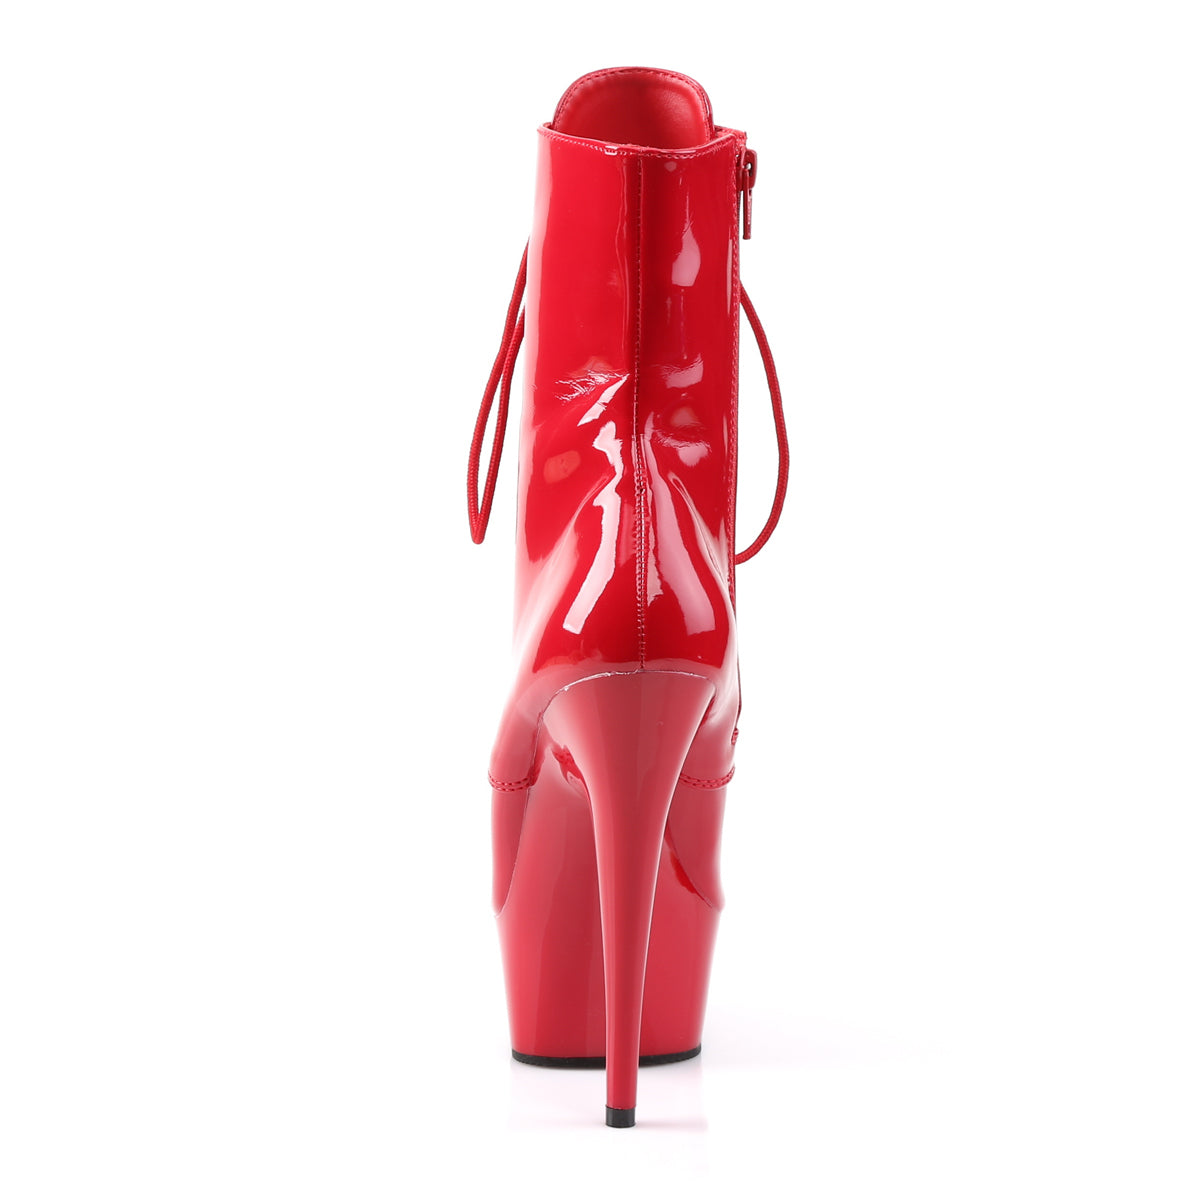 DELIGHT-1020 Pleaser 6 Inch Heel Red Pole Dancing Platforms-Pleaser- Sexy Shoes Fetish Footwear